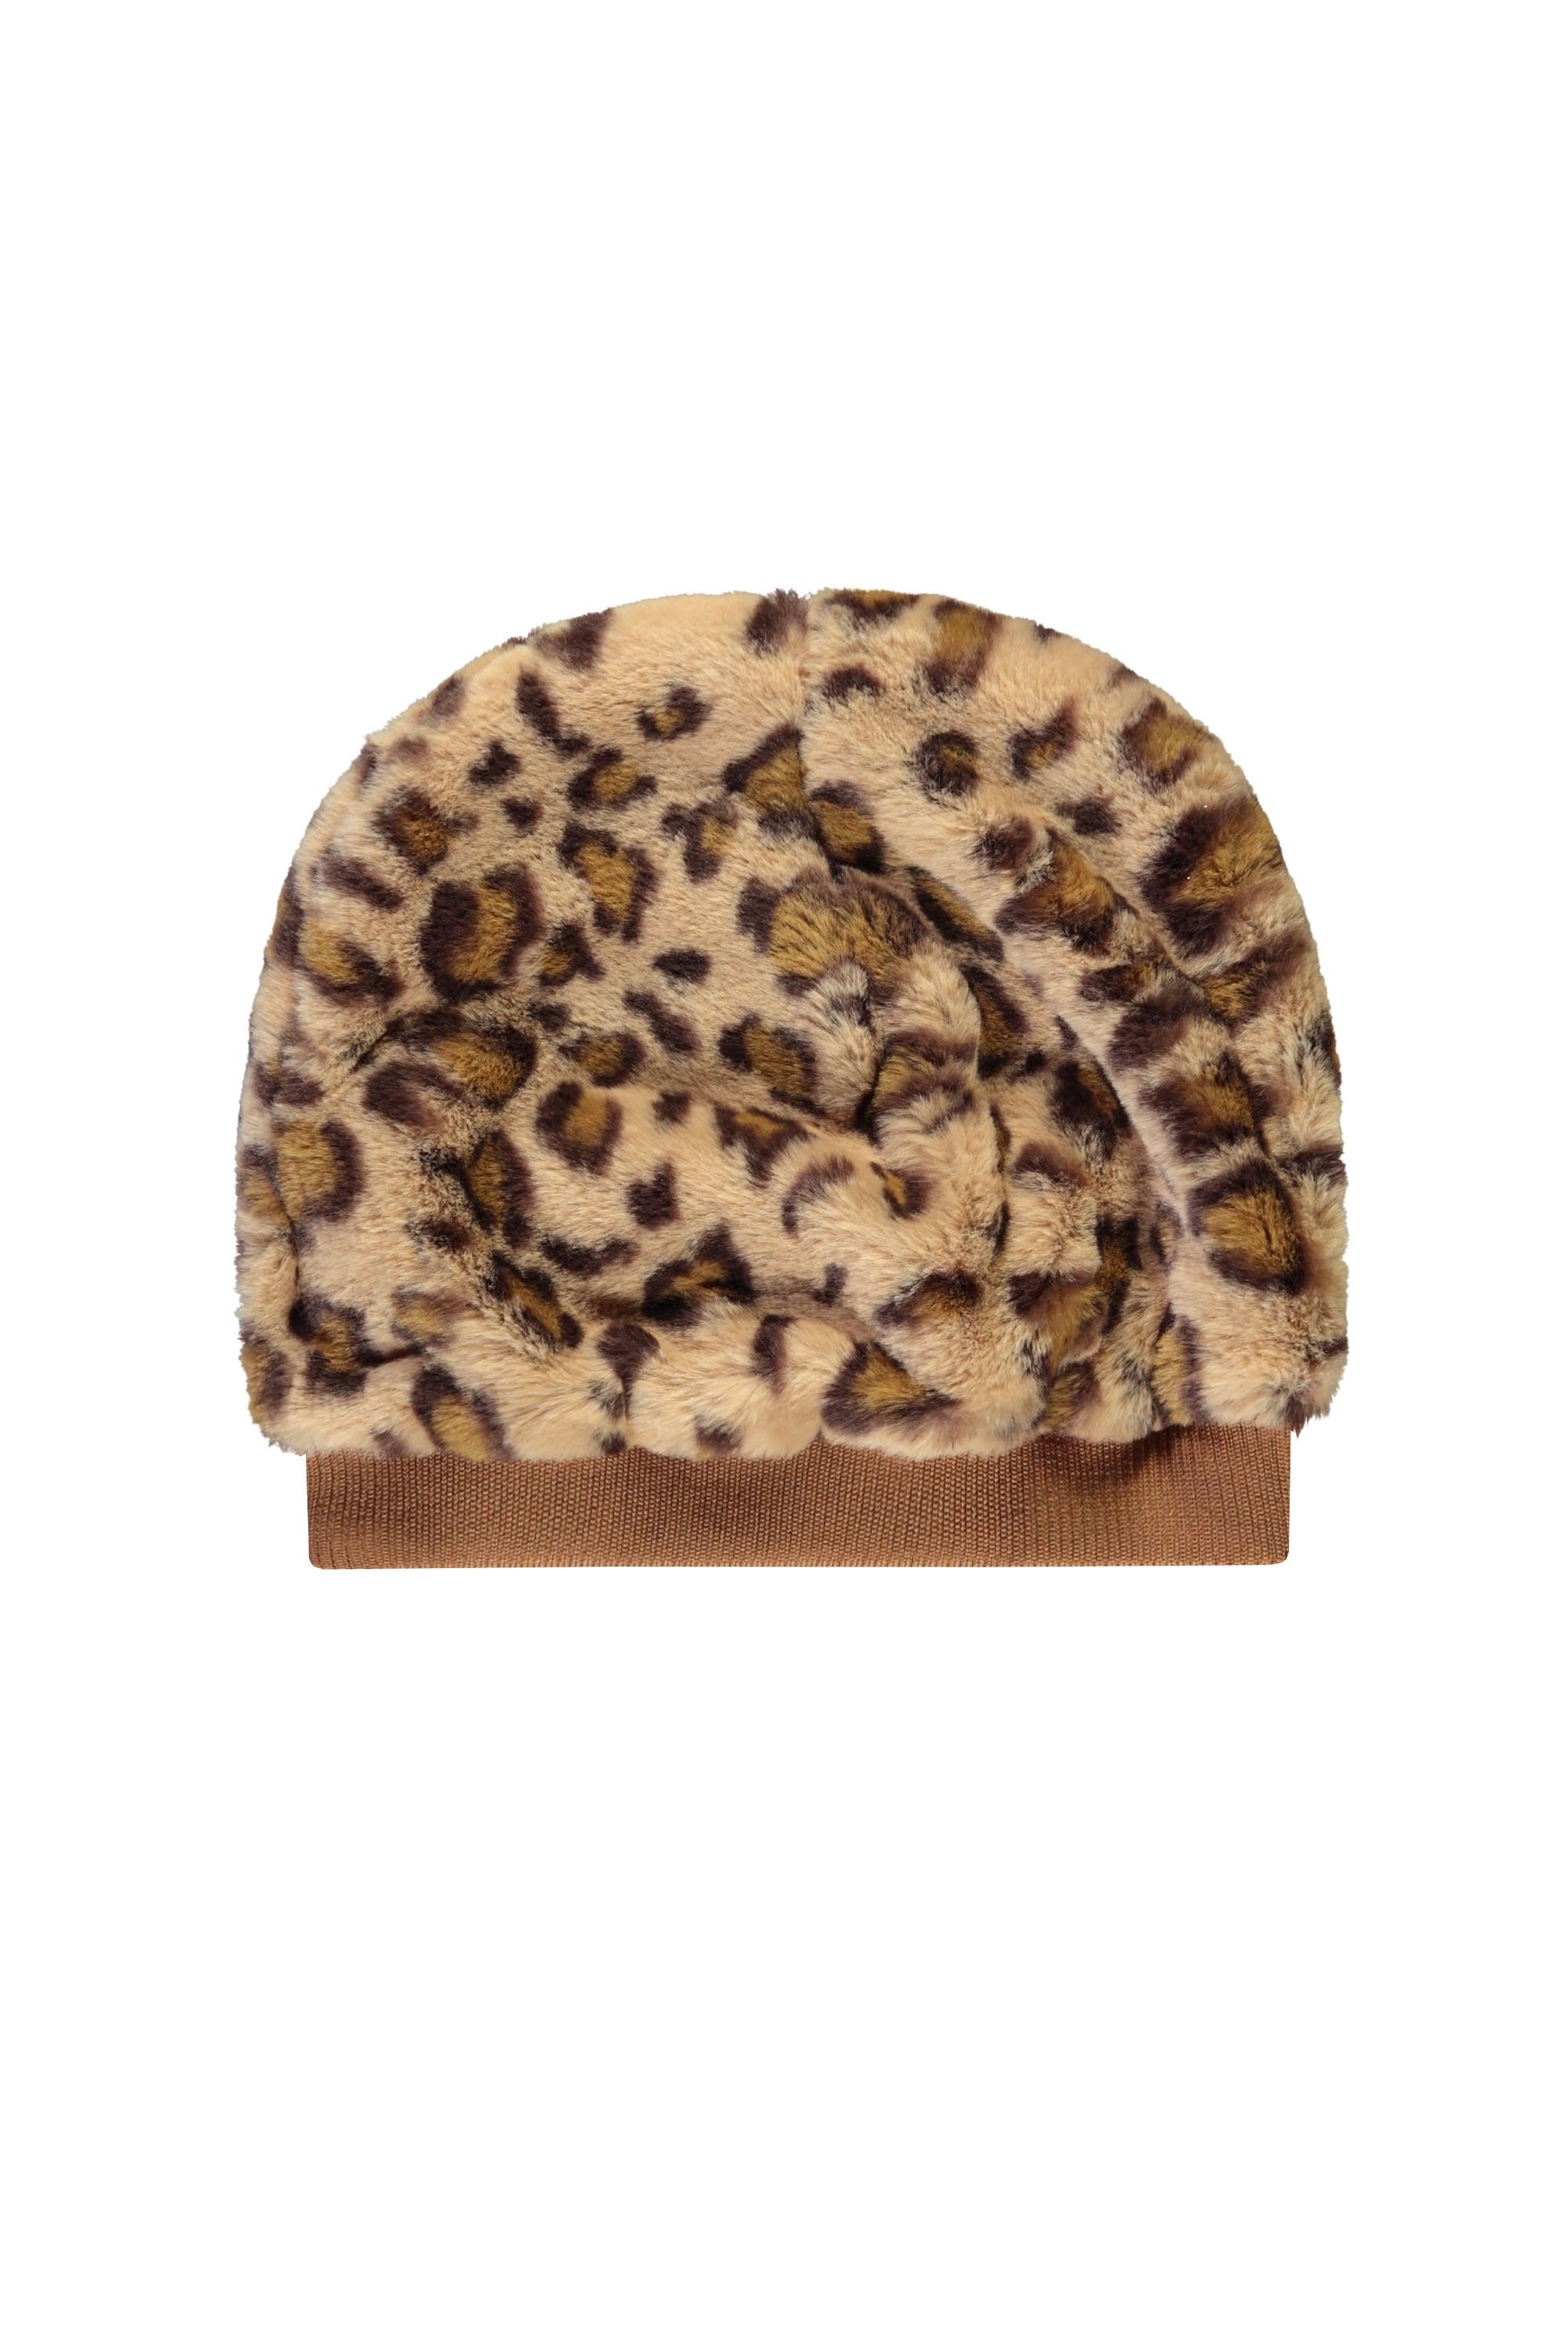 Meisjes Flo girls fur hat with rib van Like Flo in de kleur Animal in maat S2.